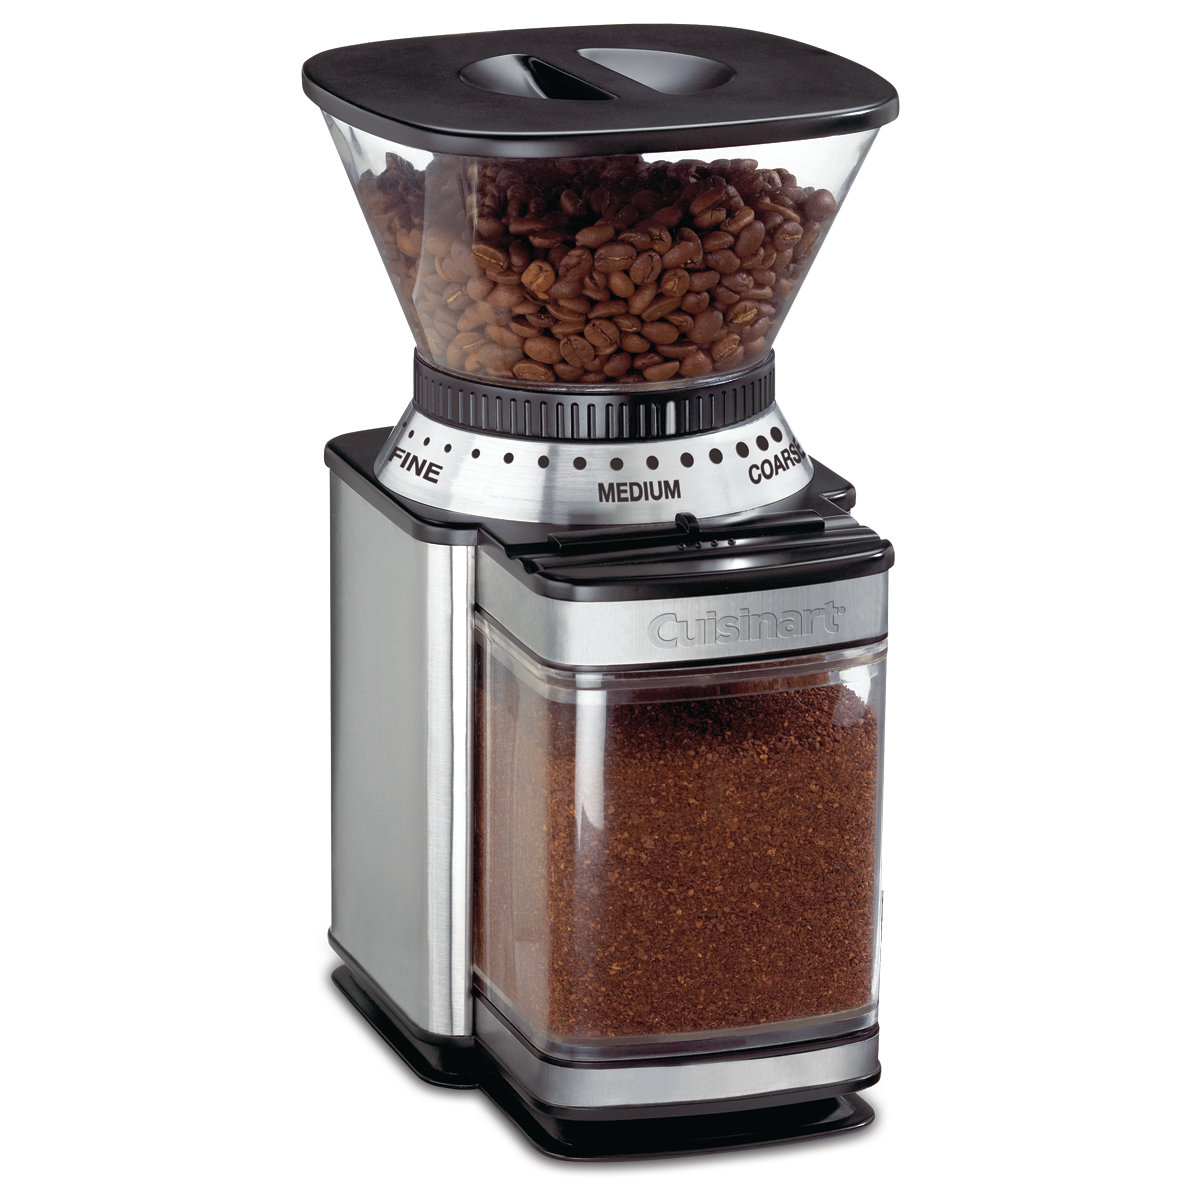 Cuisinart Supreme Grind Automatic Burr Coffee Grinder